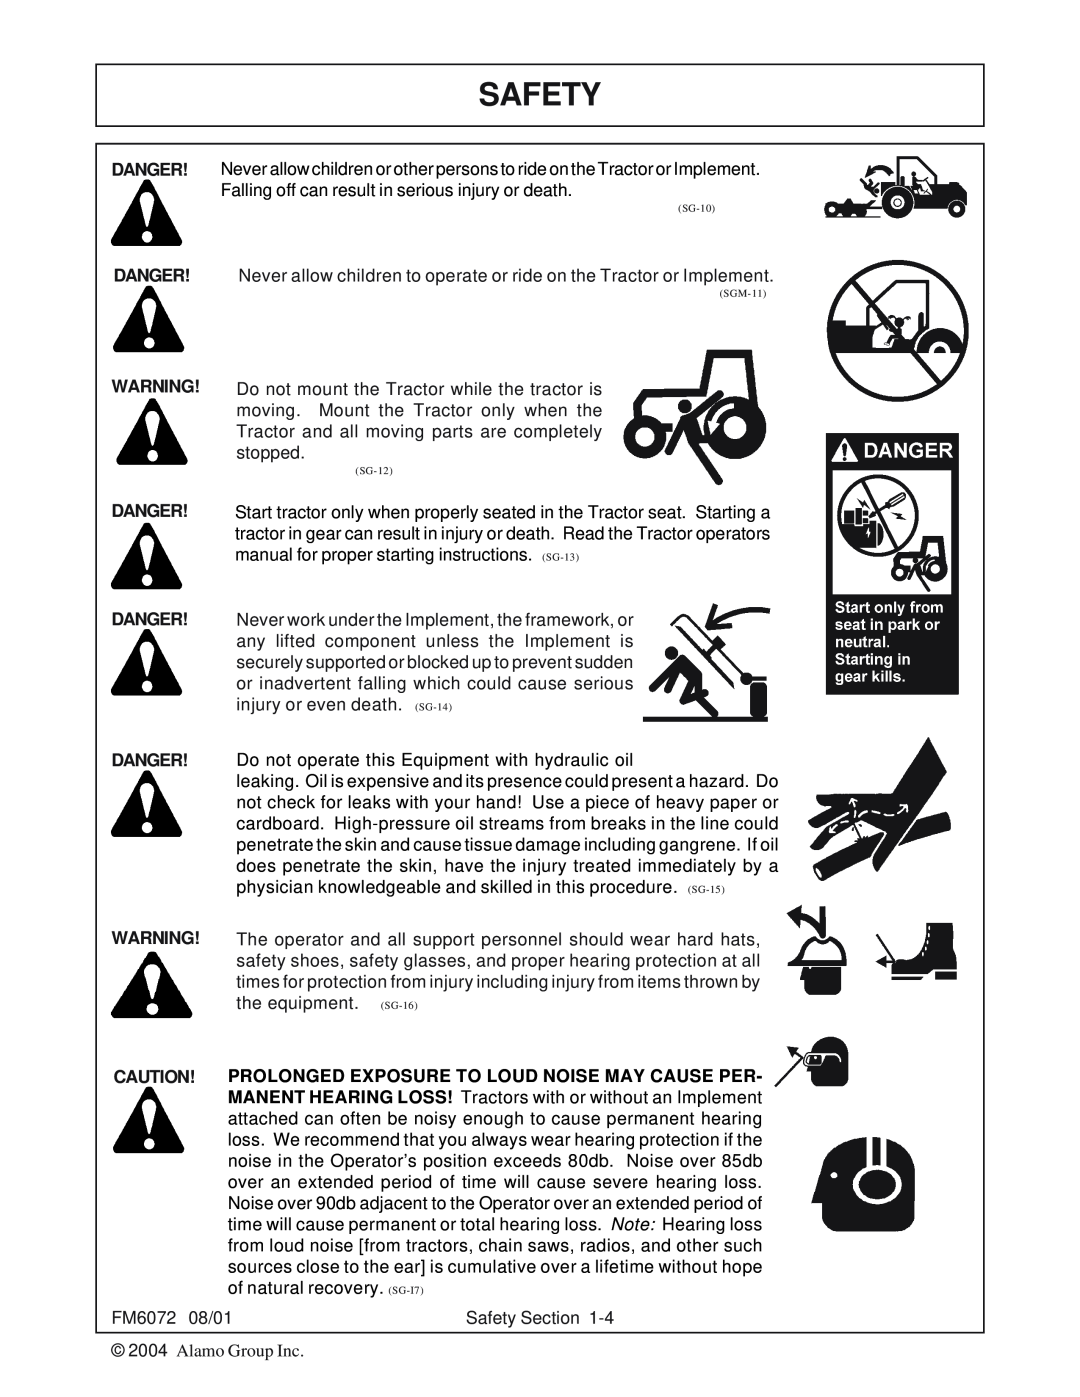 Servis-Rhino FM60/72 manual Safety, Danger, SG-10, SGM-11, SG-12 